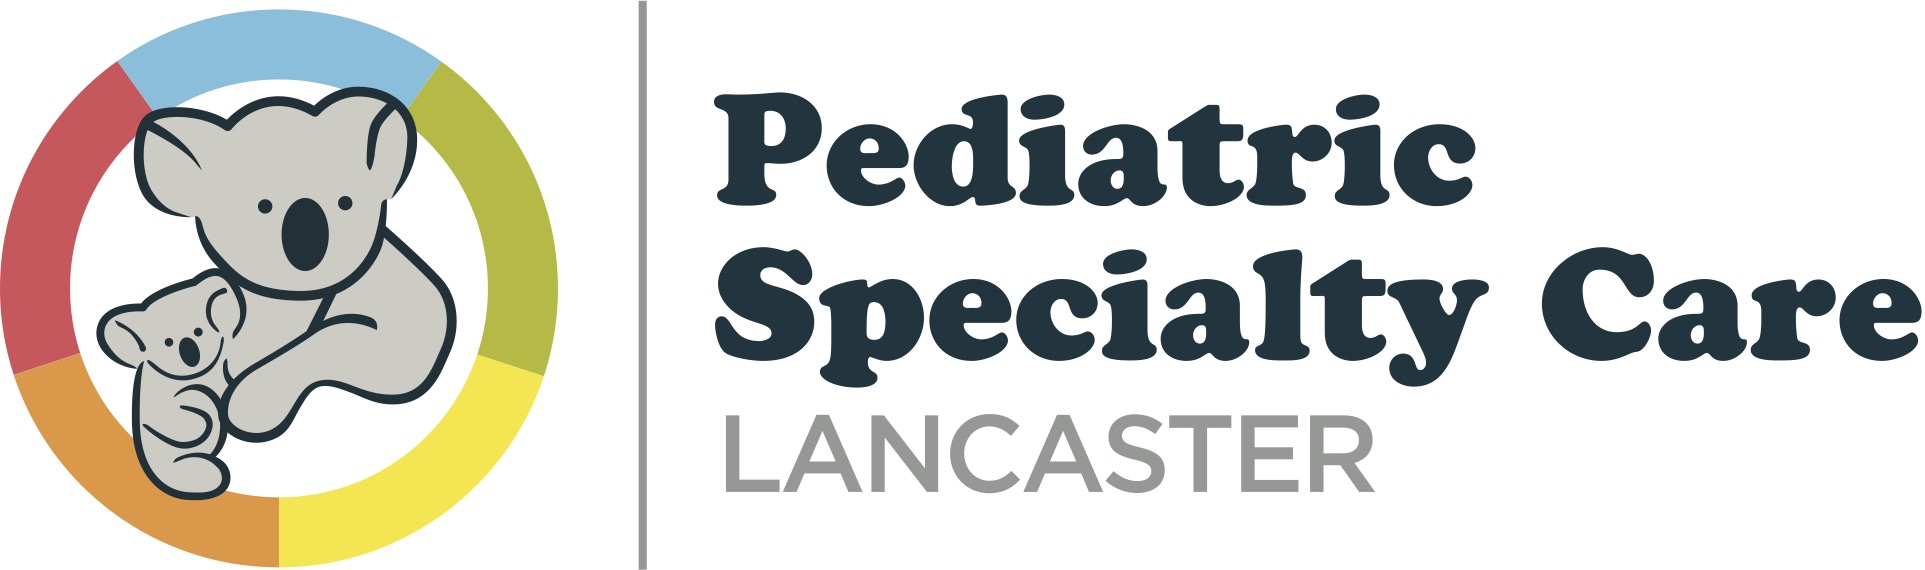 Lancaster, PA - Pediatric Specialty Care | Location logo